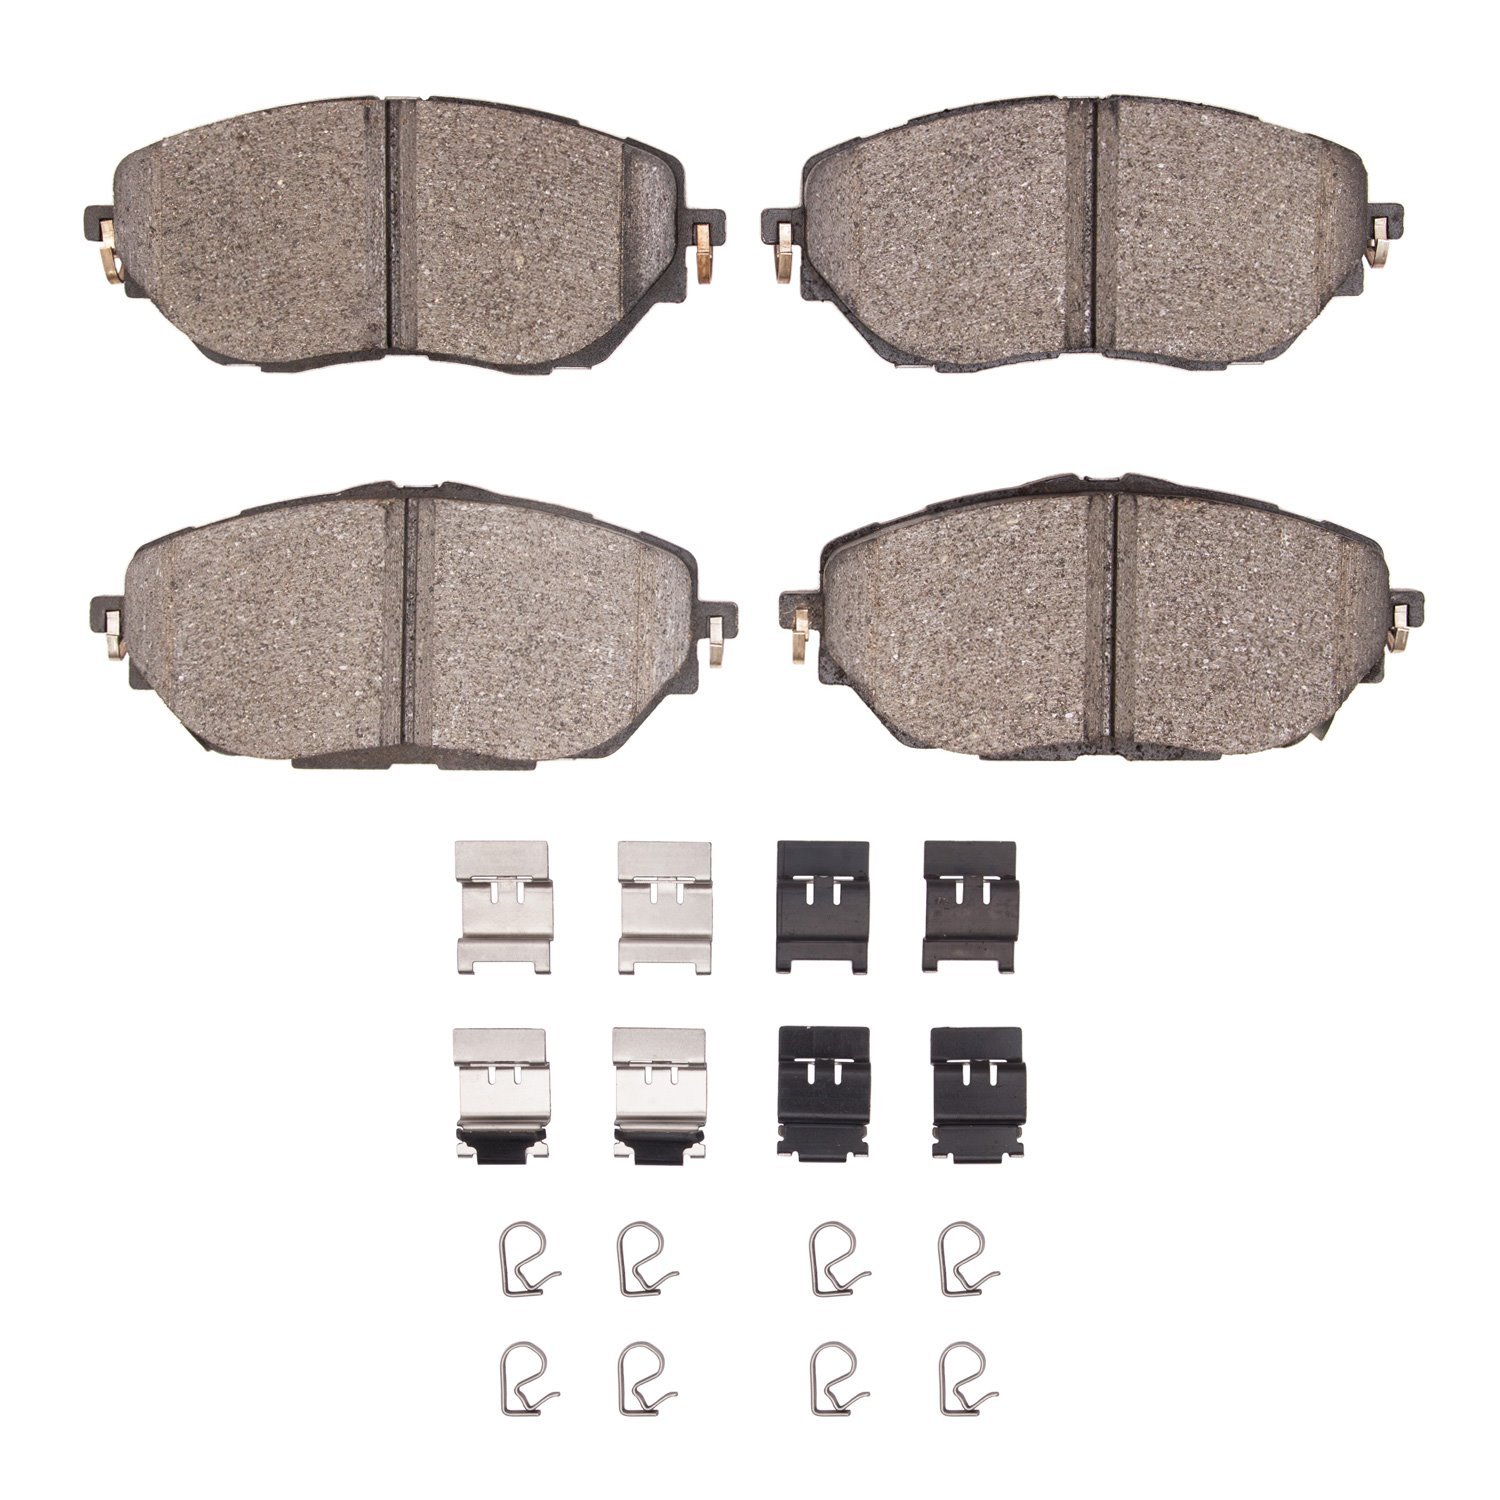 1310-2065-01 3000-Series Ceramic Brake Pads & Hardware Kit, Fits Select Lexus/Toyota/Scion, Position: Front